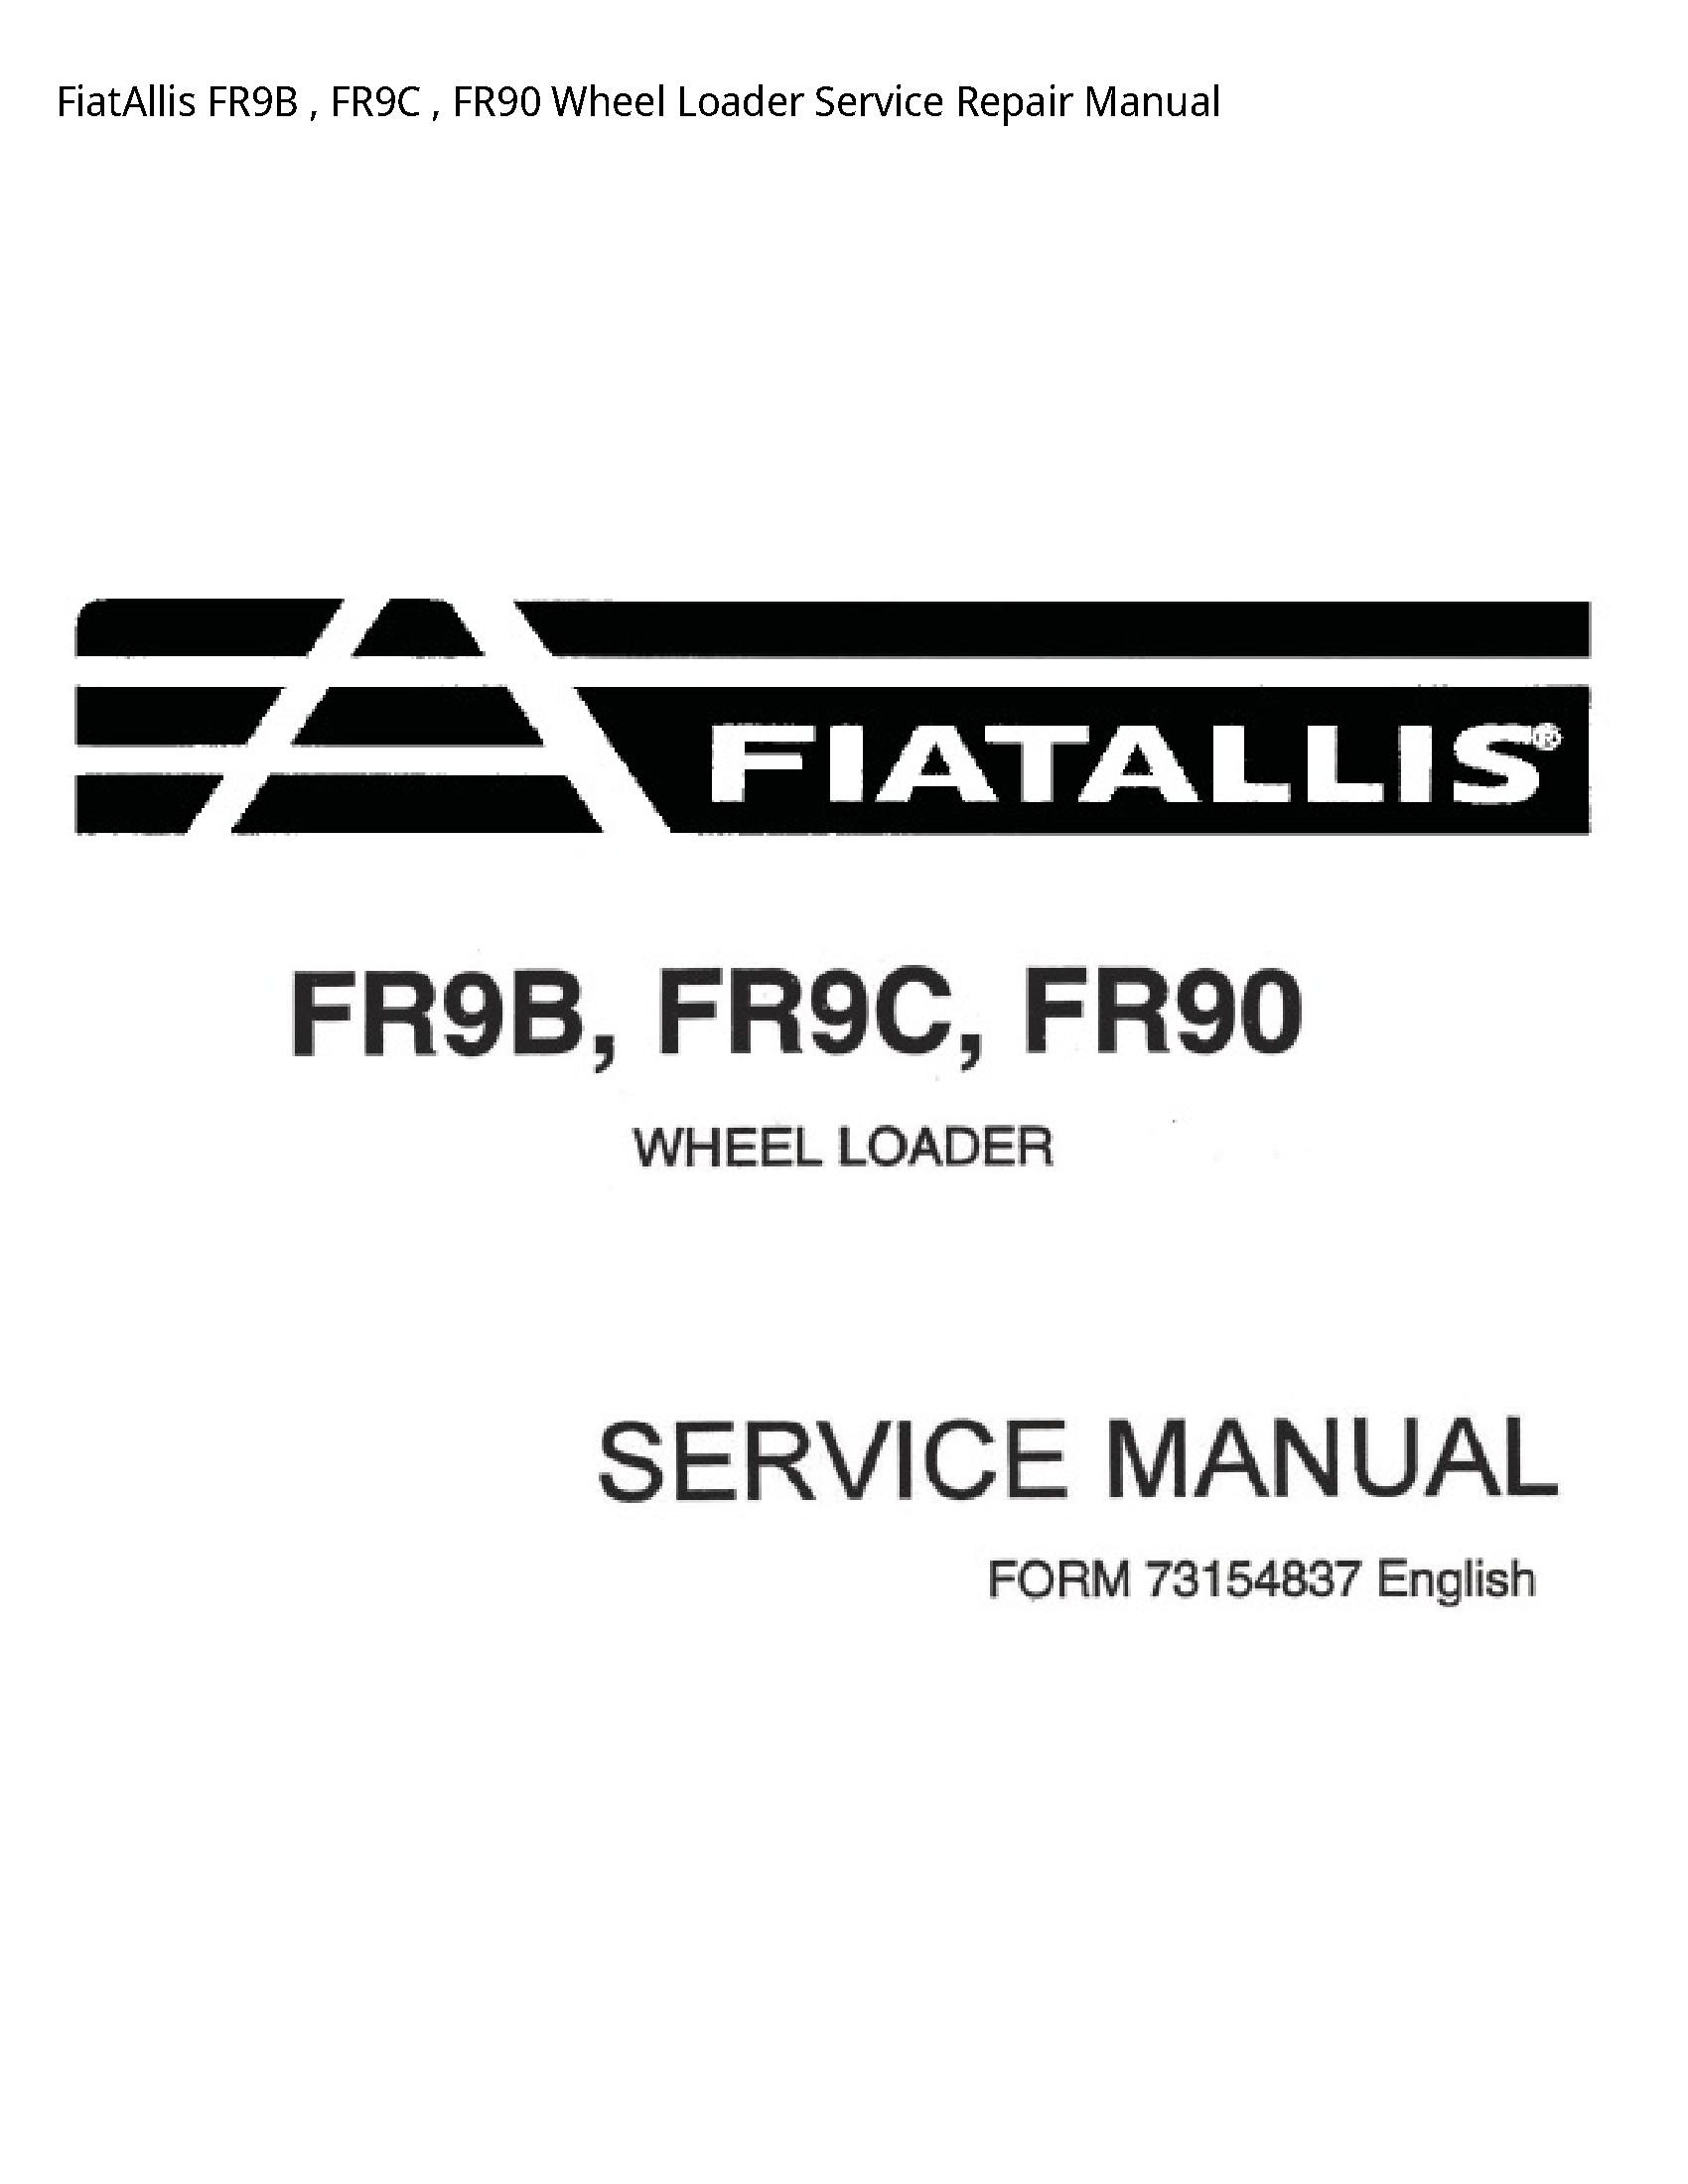 Fiatallis FR9B Wheel Loader manual